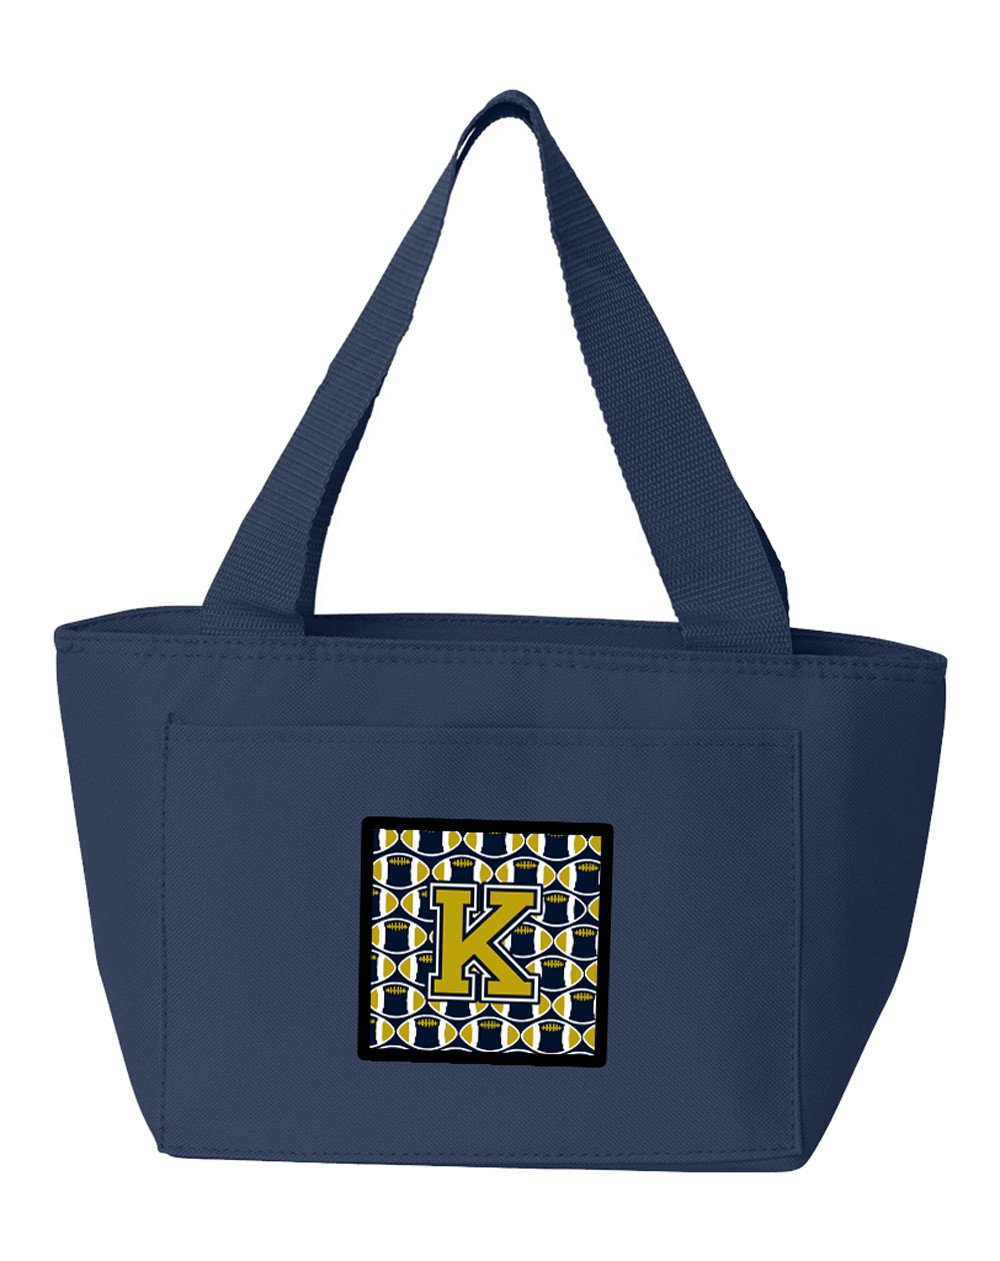 Letter K Football Blue and Gold Lunch Bag CJ1074-KNA-8808 by Caroline's Treasures